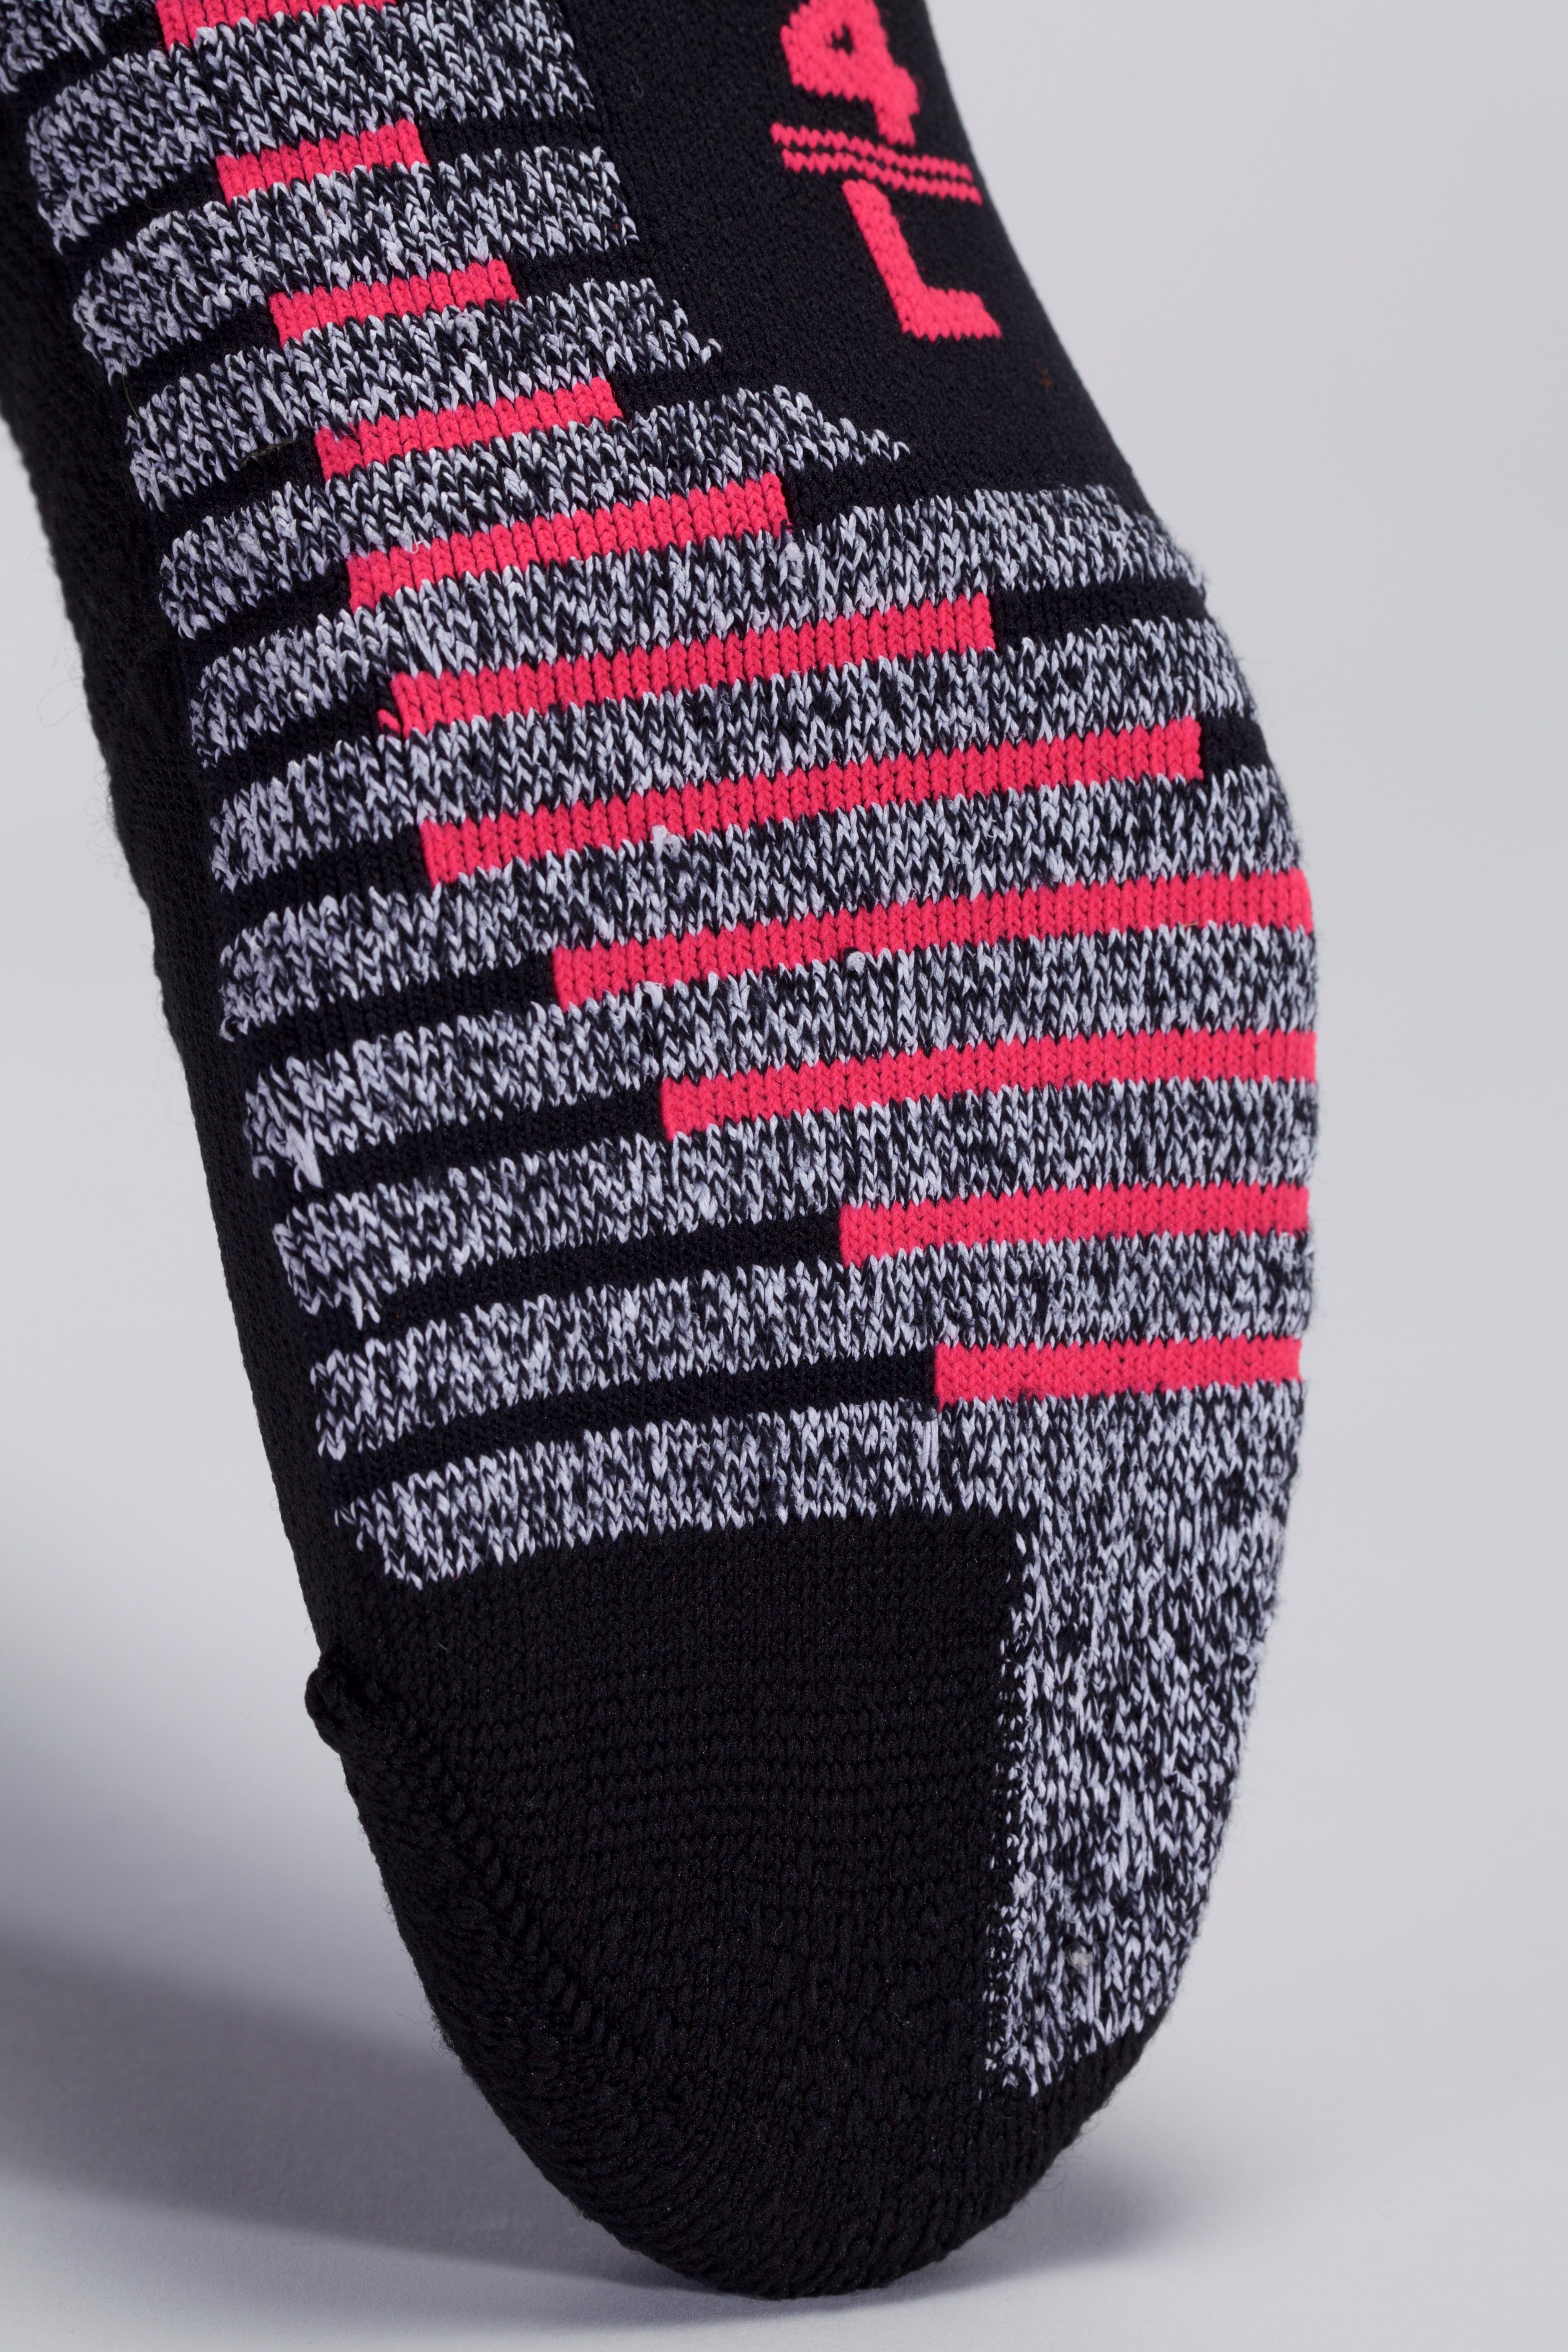 Best football grip socks: We tested the best socks to stop